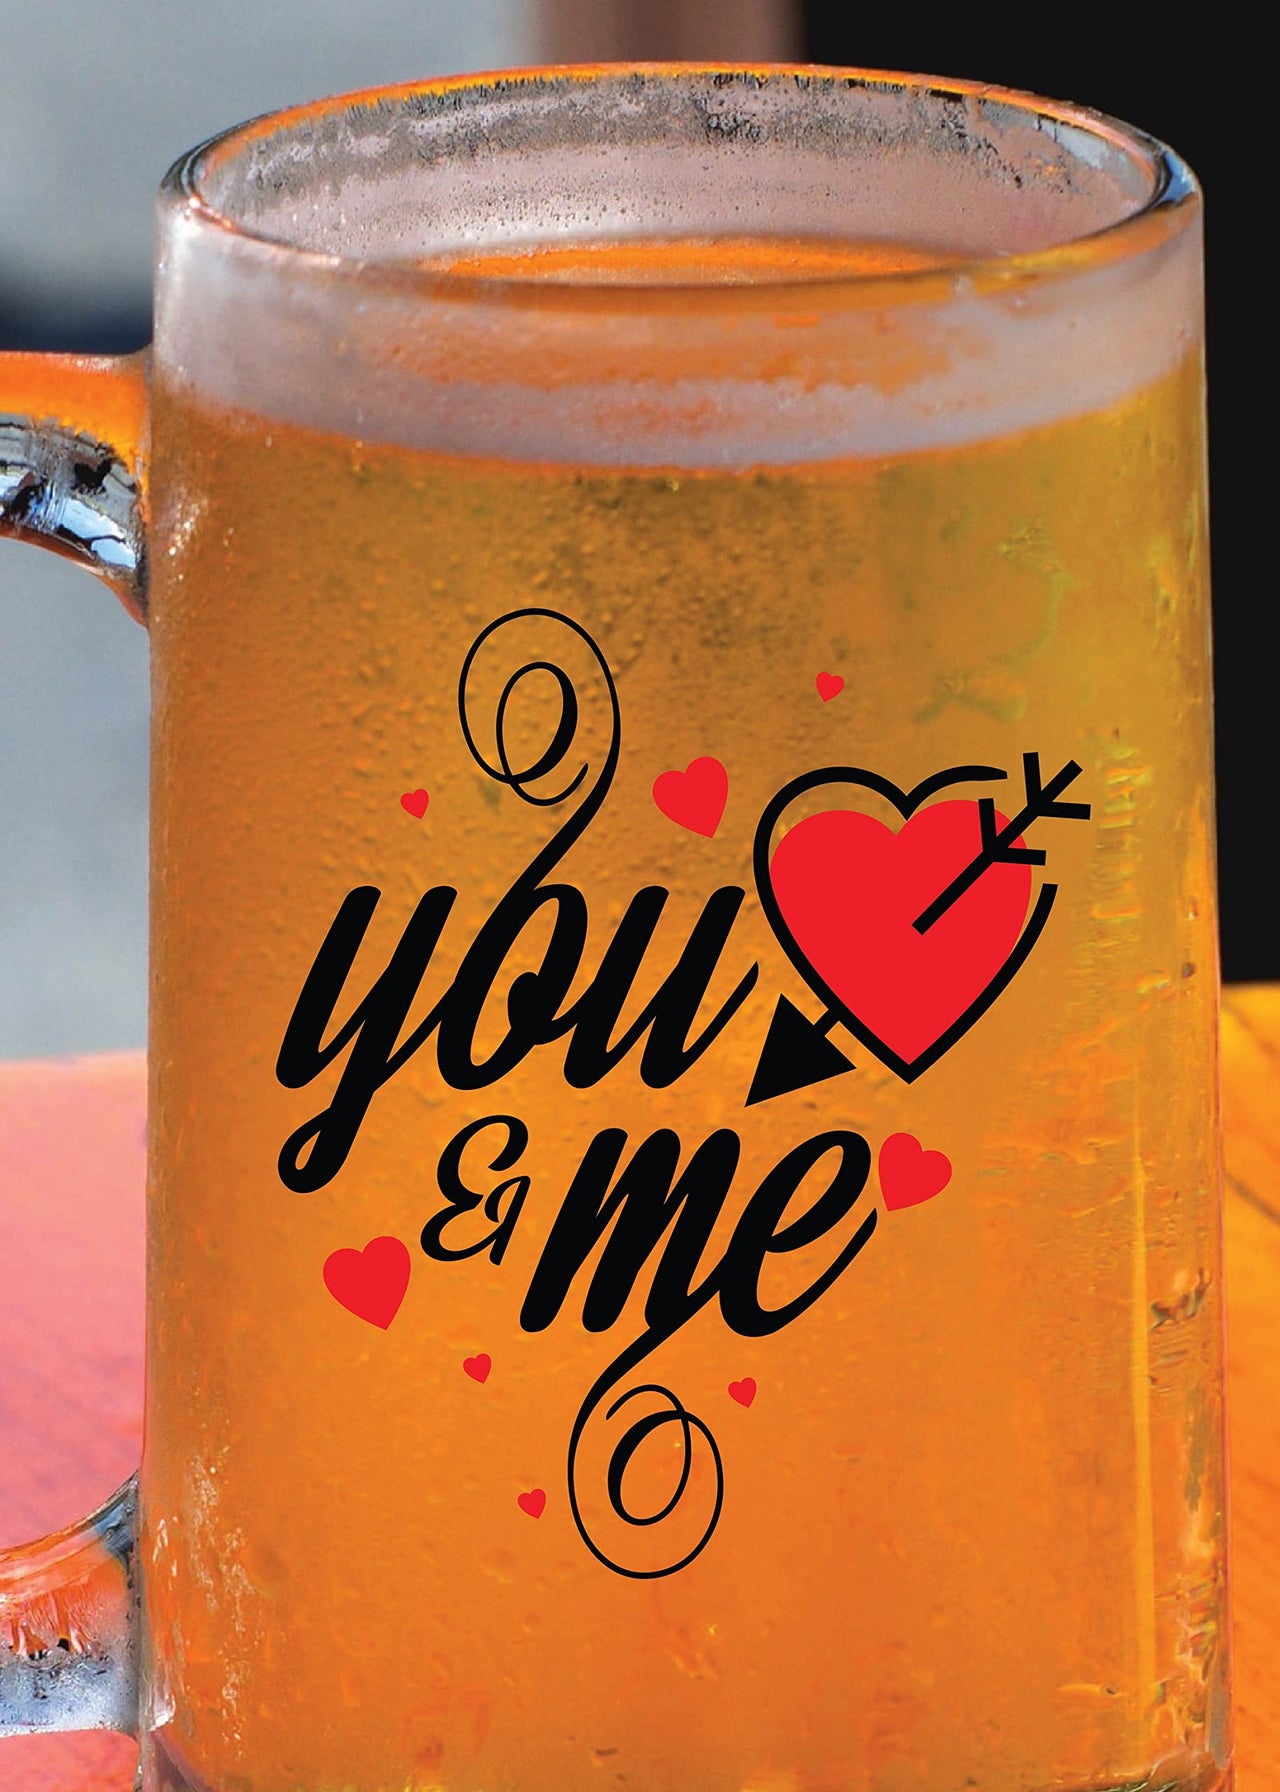 You & Me - Beer Mug - 1 Piece, Clear, 500 ml - Transparent Glass Beer Mug - Printed Beer Mug with Handle Gift for Men, Dad, Brother, Wife